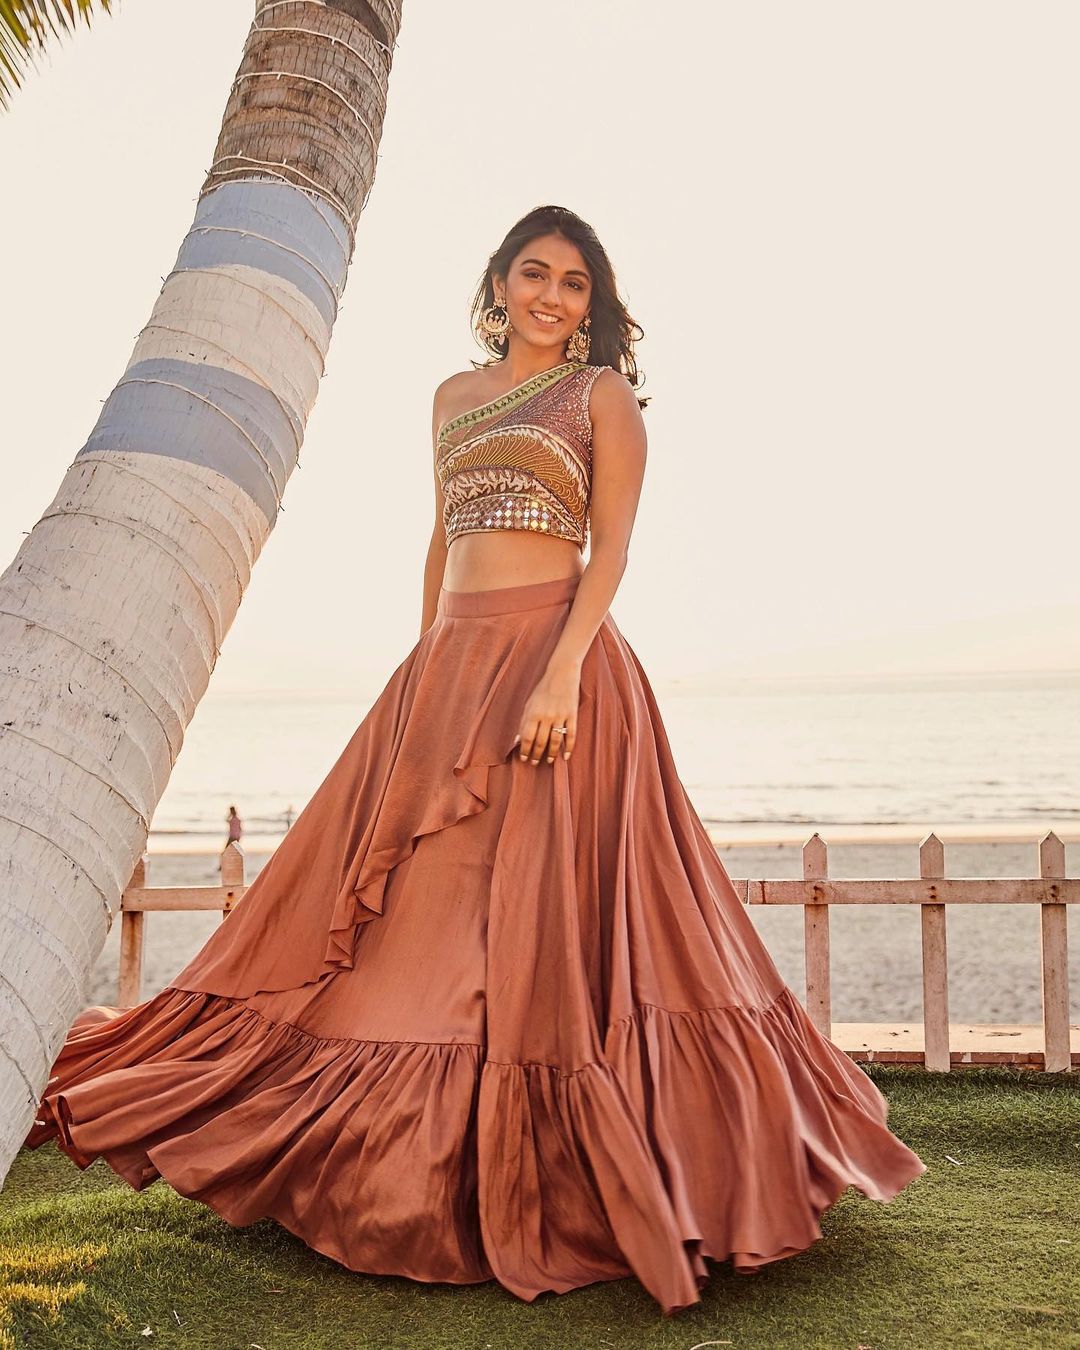 Masoom Minawala Mehta looking breathtakingly beautiful in Designer ash gold lehenga || Planet Bollywood || Media Tribe || The-Uncovered